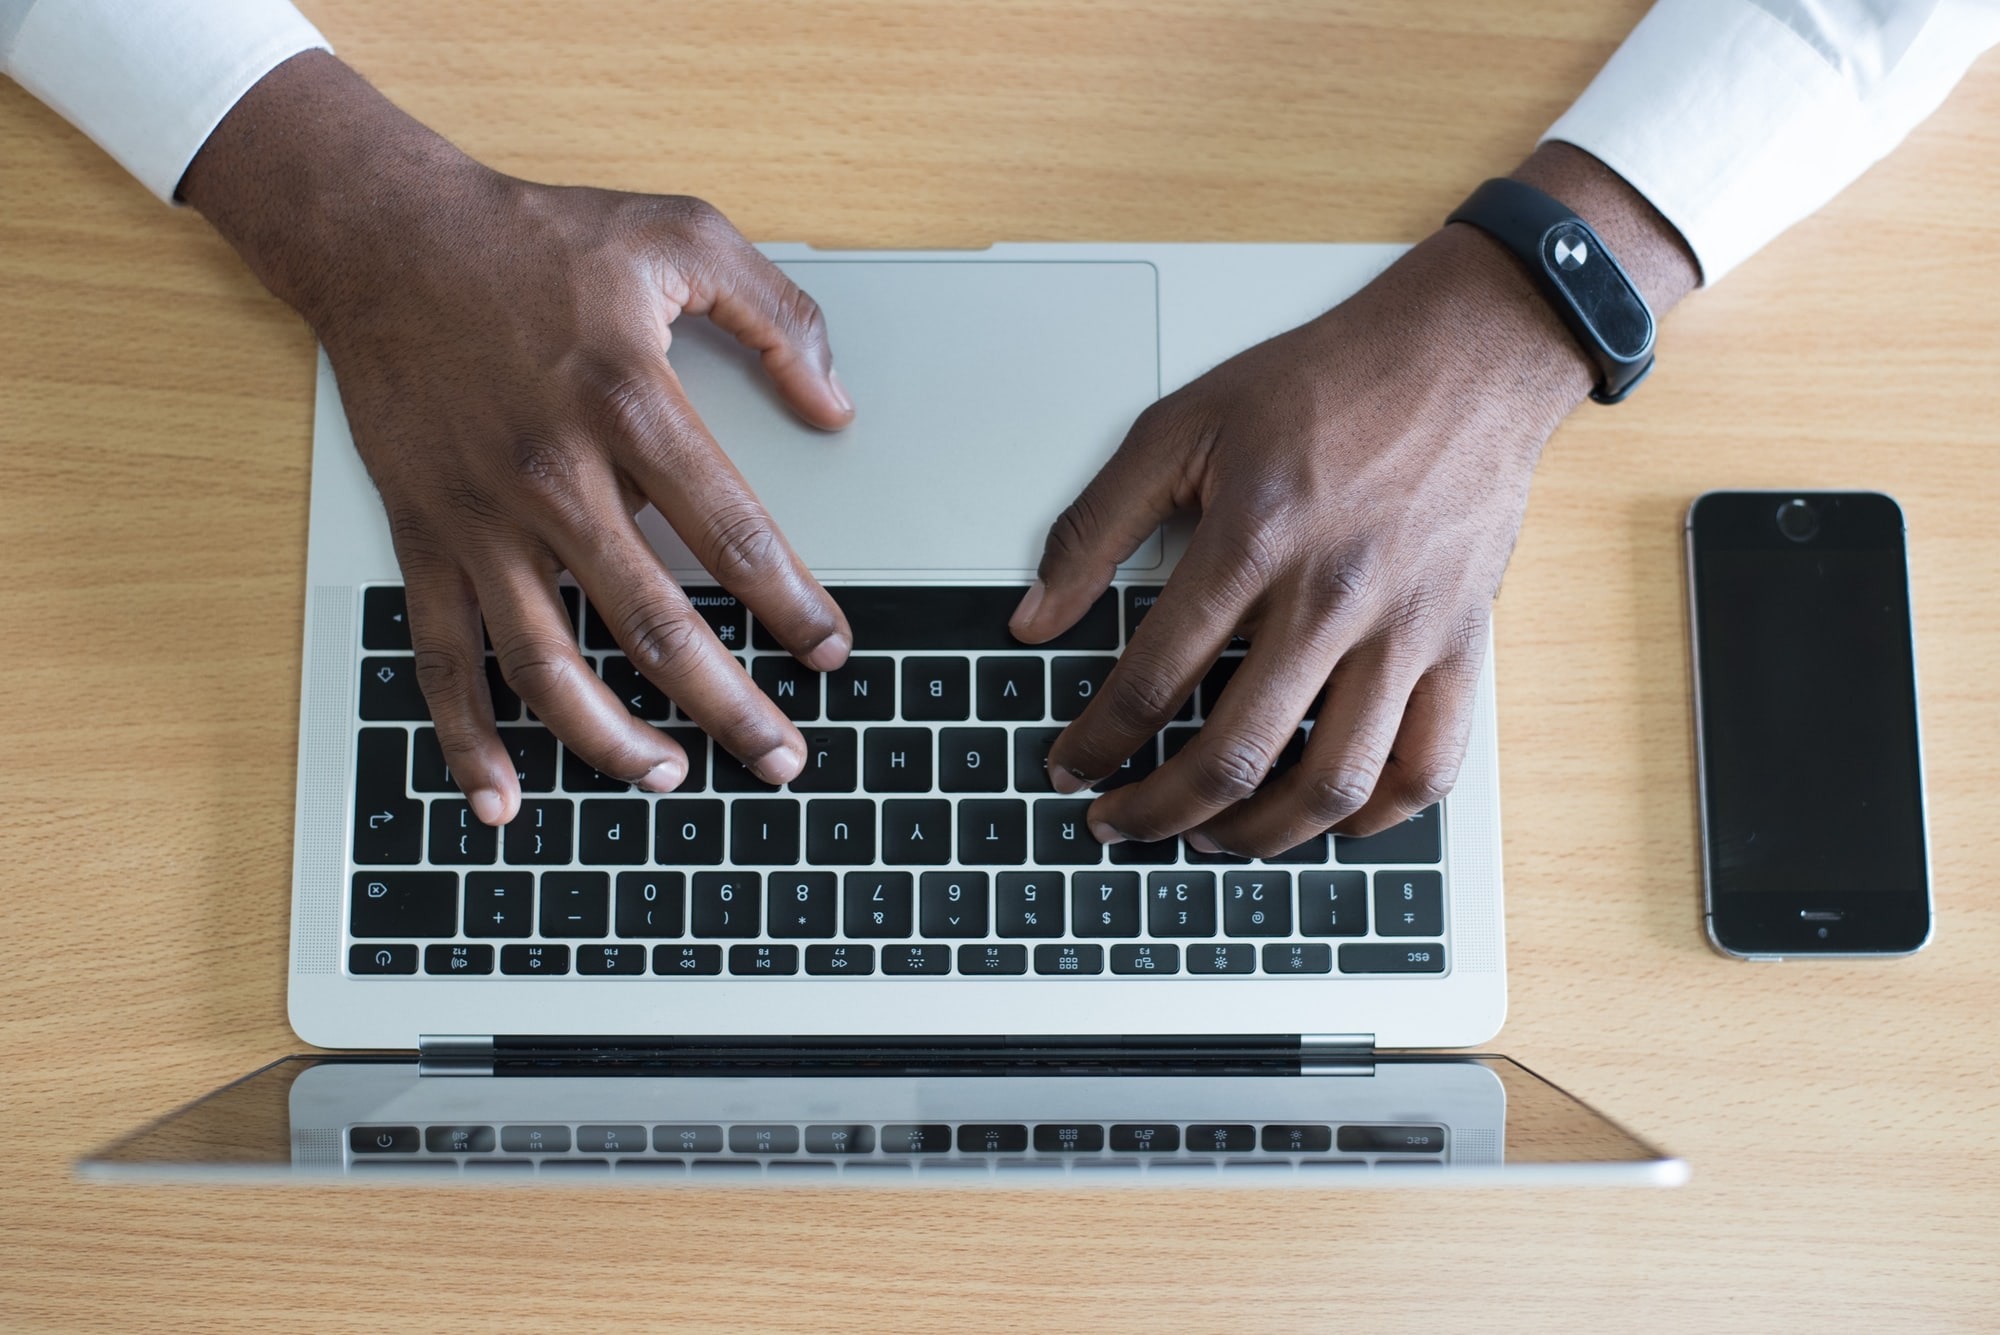 Hands typing on laptop keyboard - Still photo